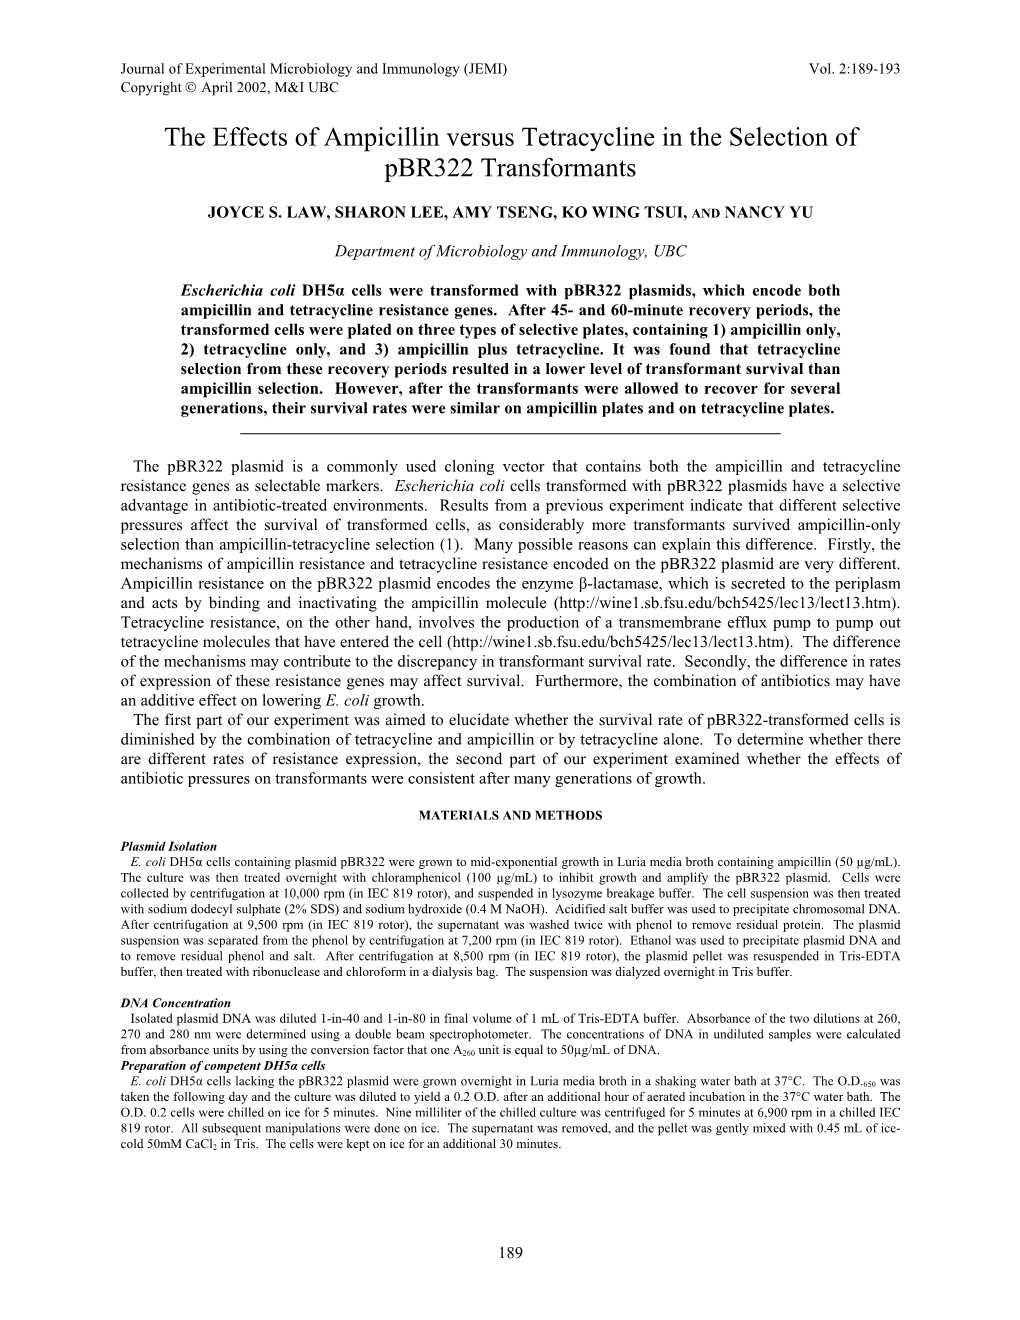 Ampicillin Versus Tetracycline in the Selection of Pbr322 Transformants